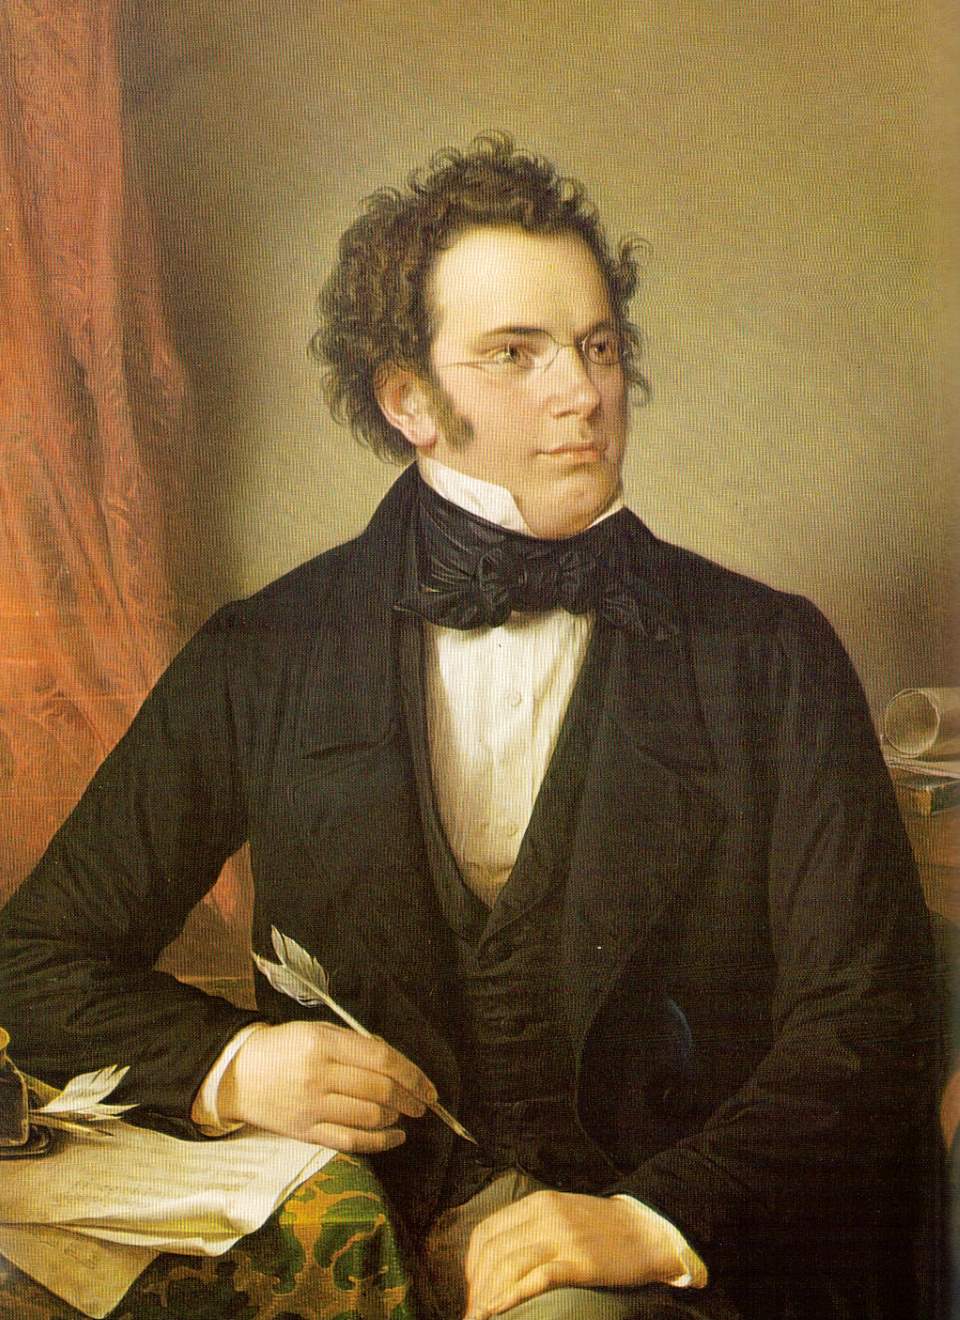 Franz Schubert, composer of Unfinished Symphony